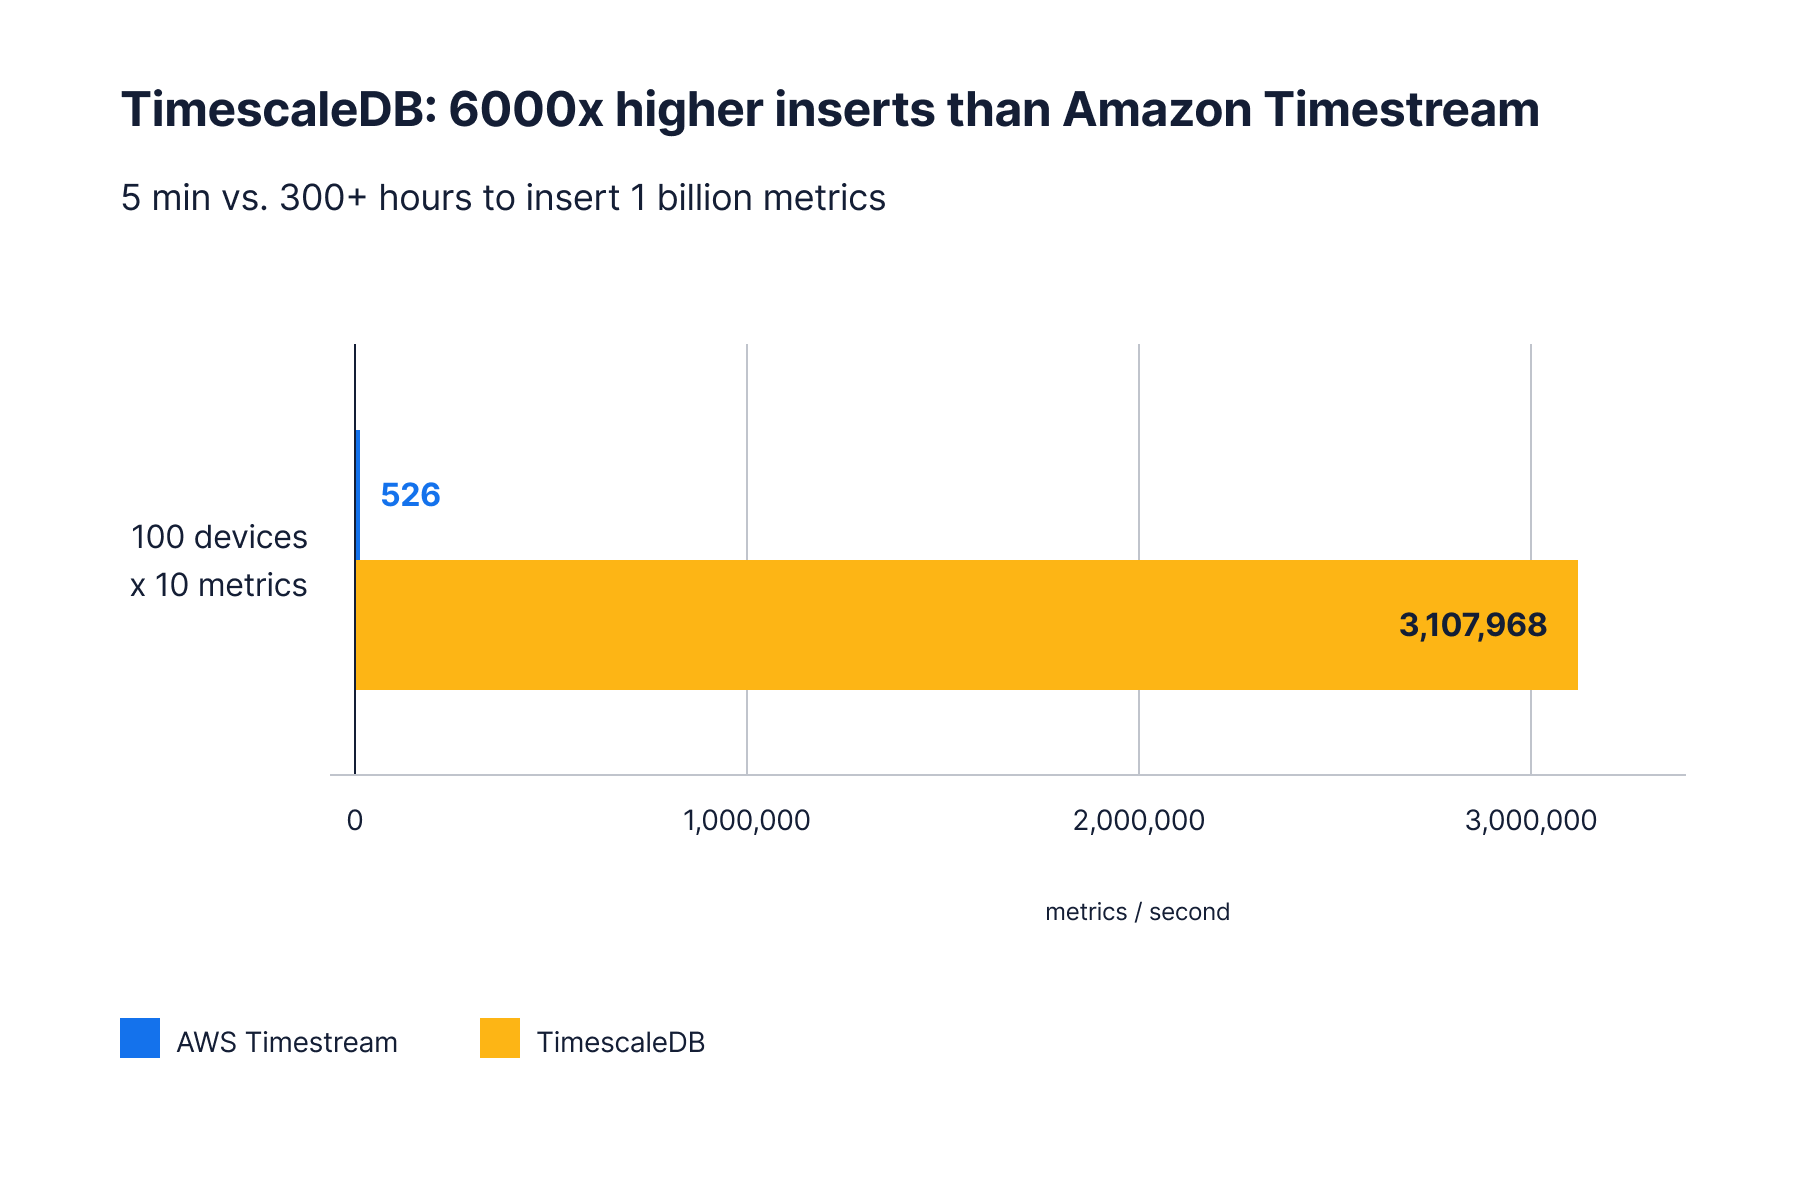 TimescaleDB achieves 6000 times higher inserts than Amazon Timestream